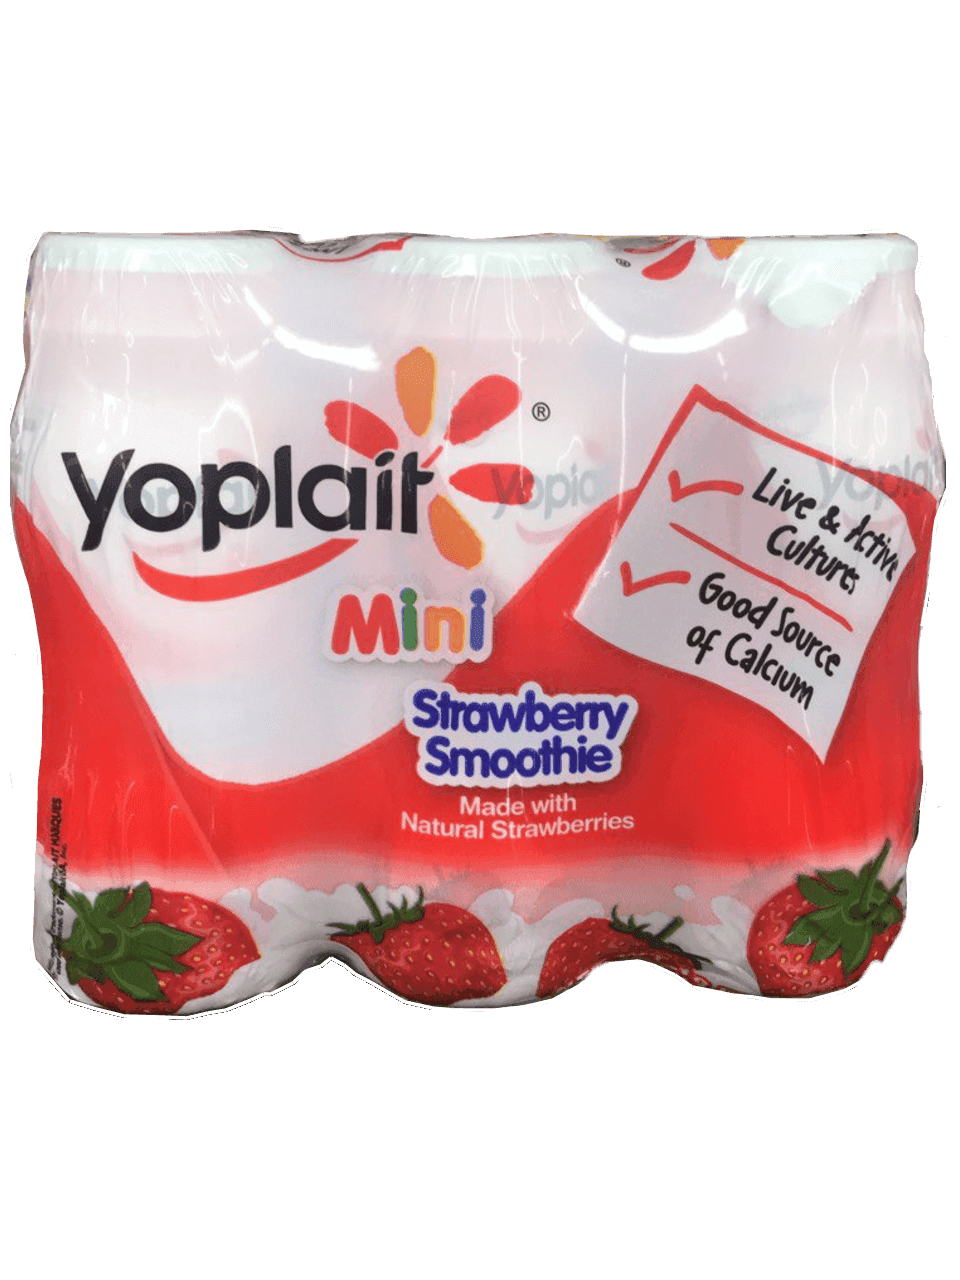 Yoplait - Mini Strawberry Smoothie 6pack 3oz Bottles